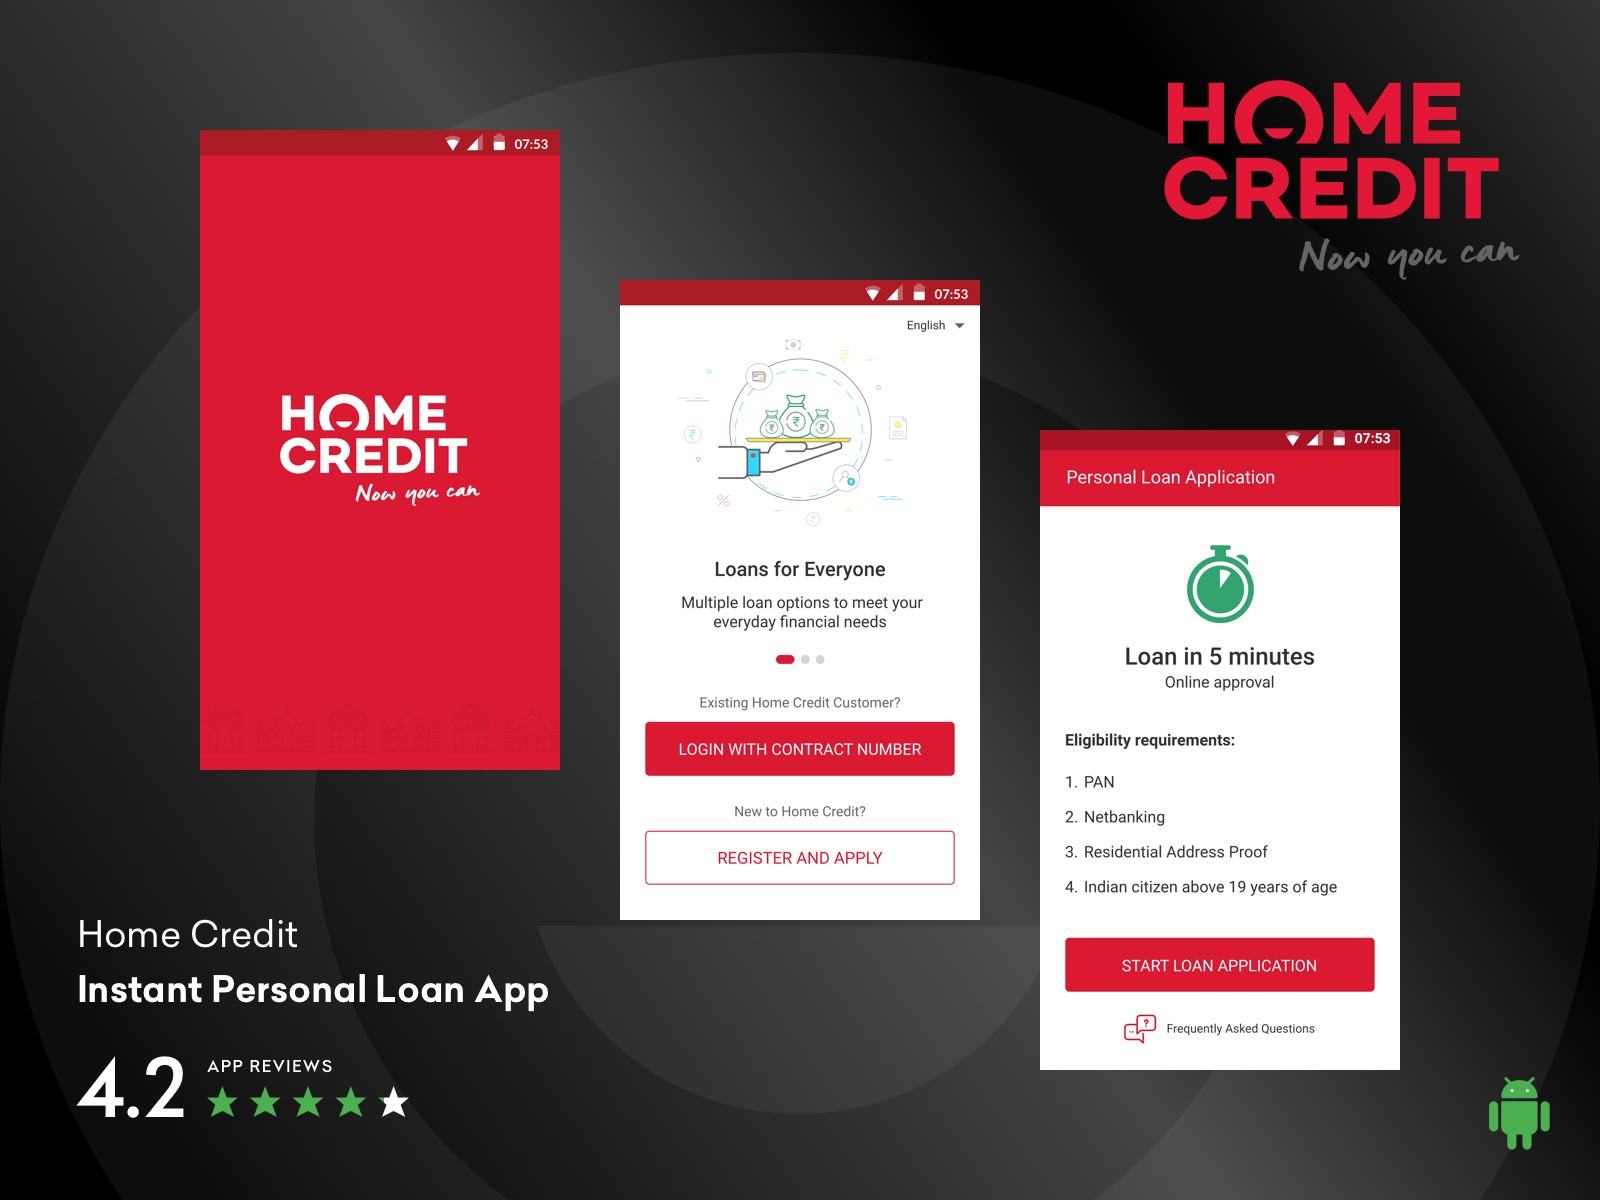 Home Credit India - Instant Personal Loan App by Girish Tarwatkar on